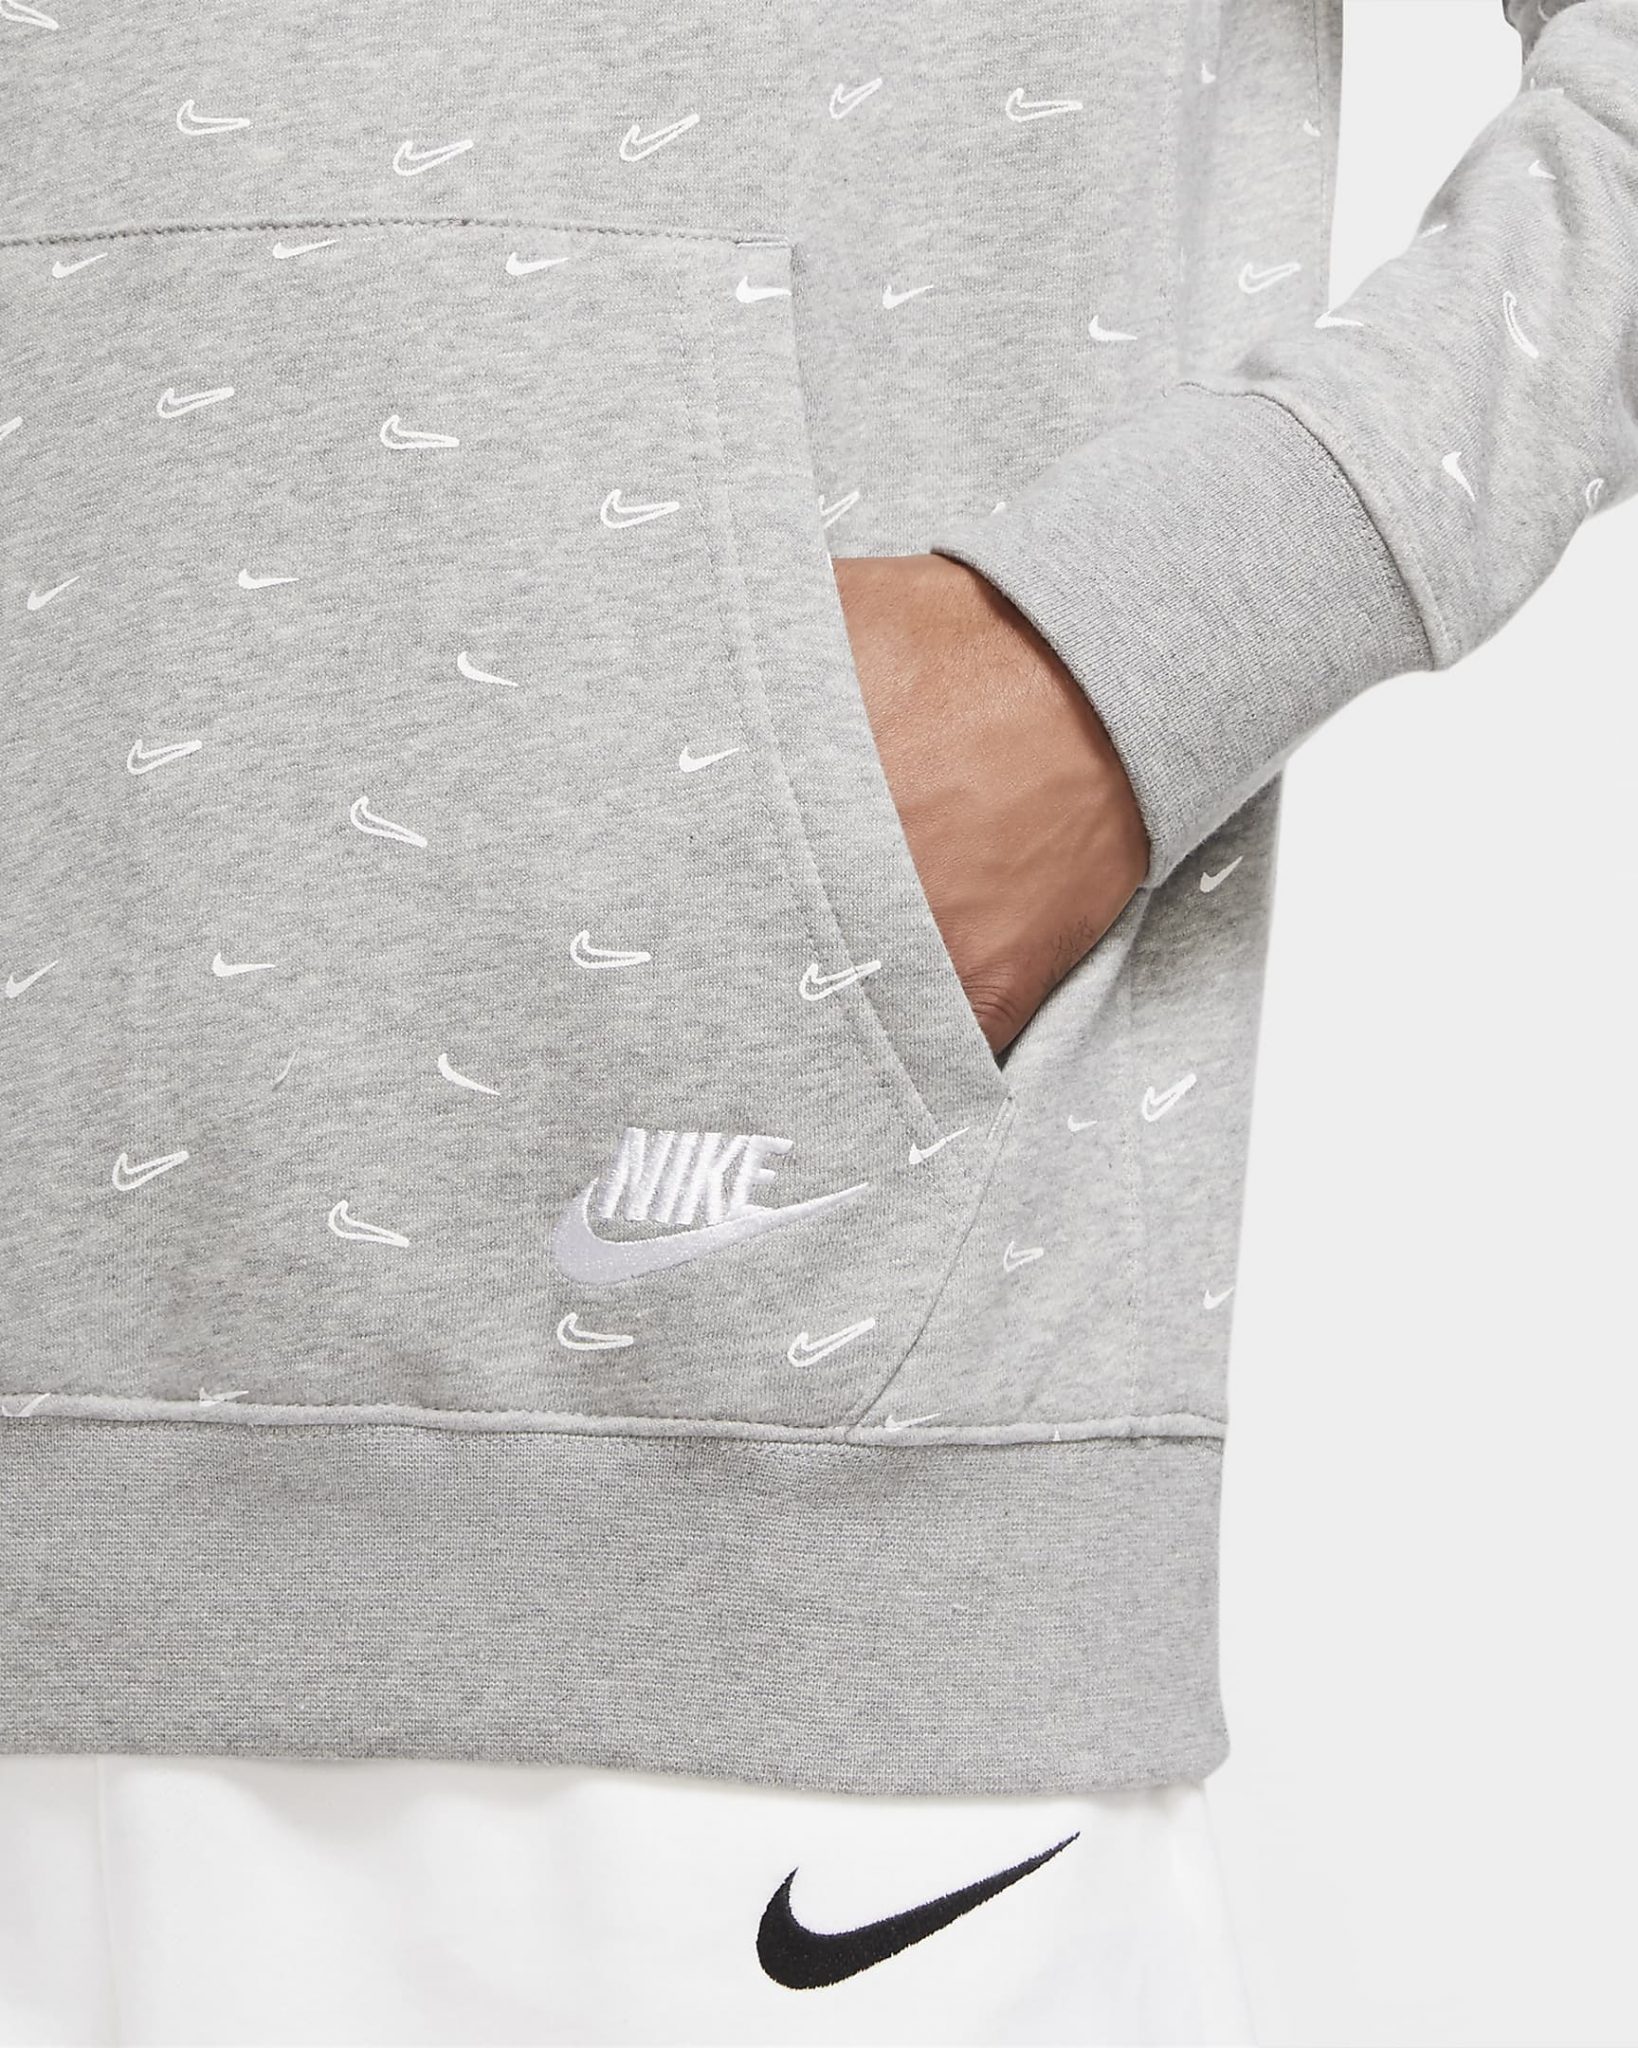 Nike Dunk High Vast Grey Hoodie Outfit